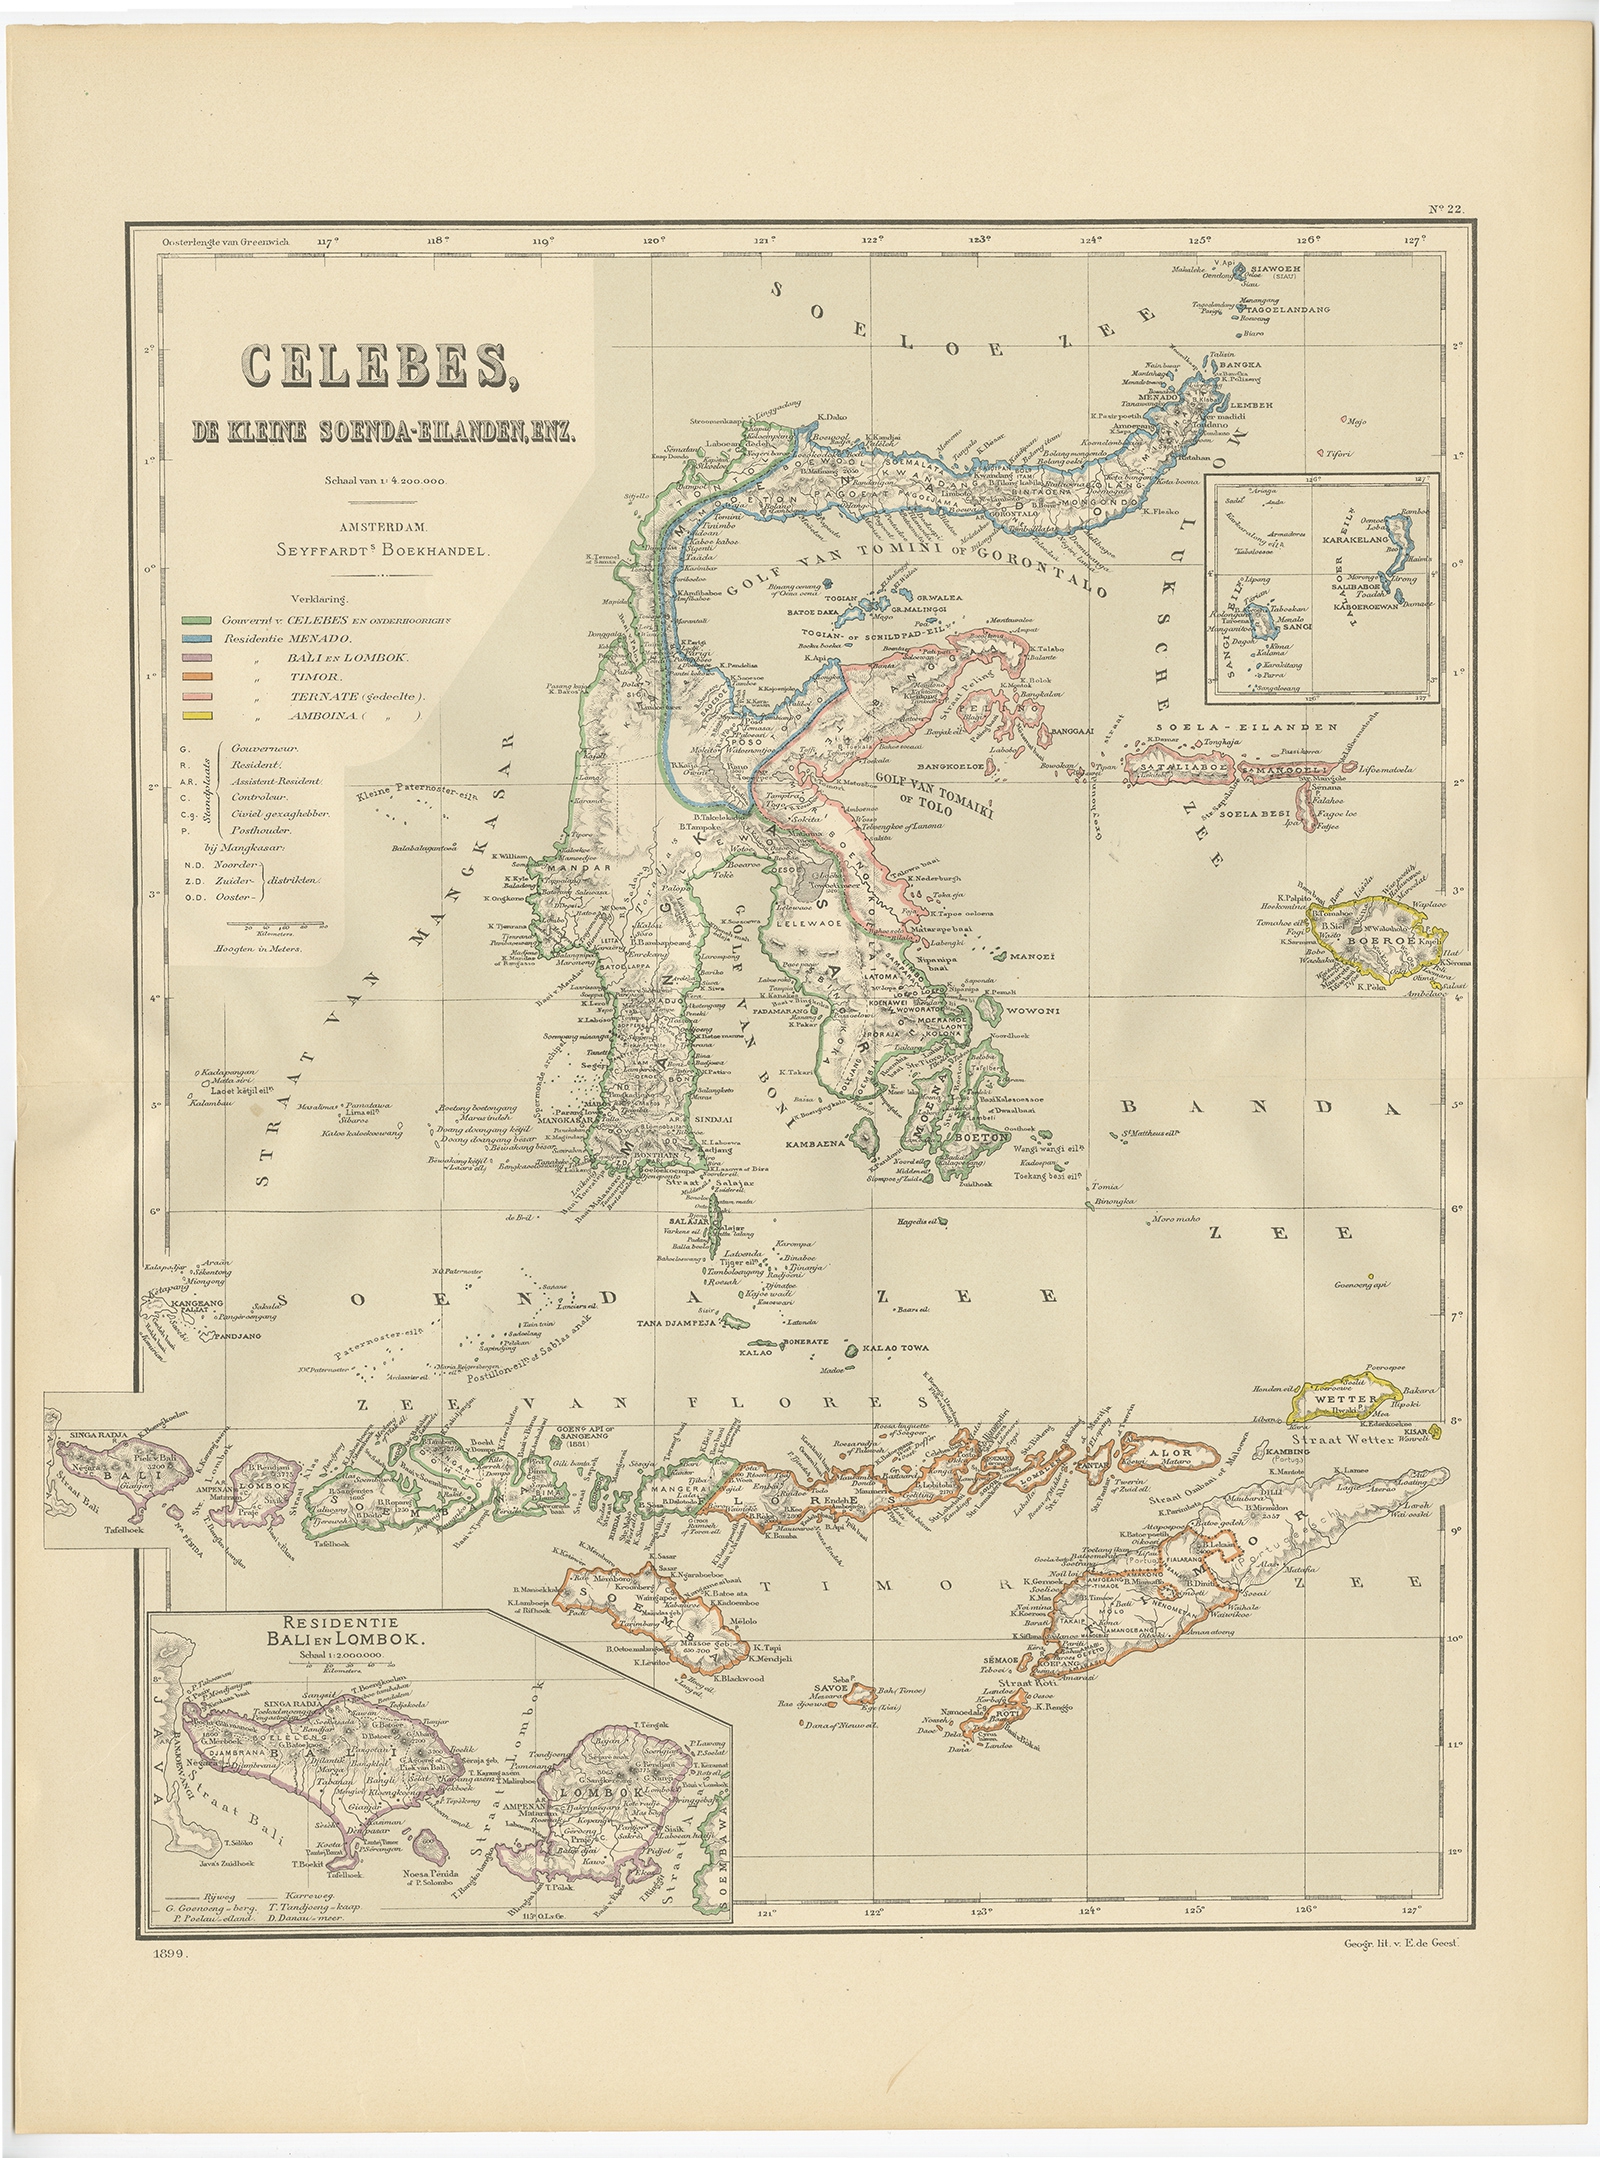 Map of Celebes or Sulawesi - Dornseiffen c.1900